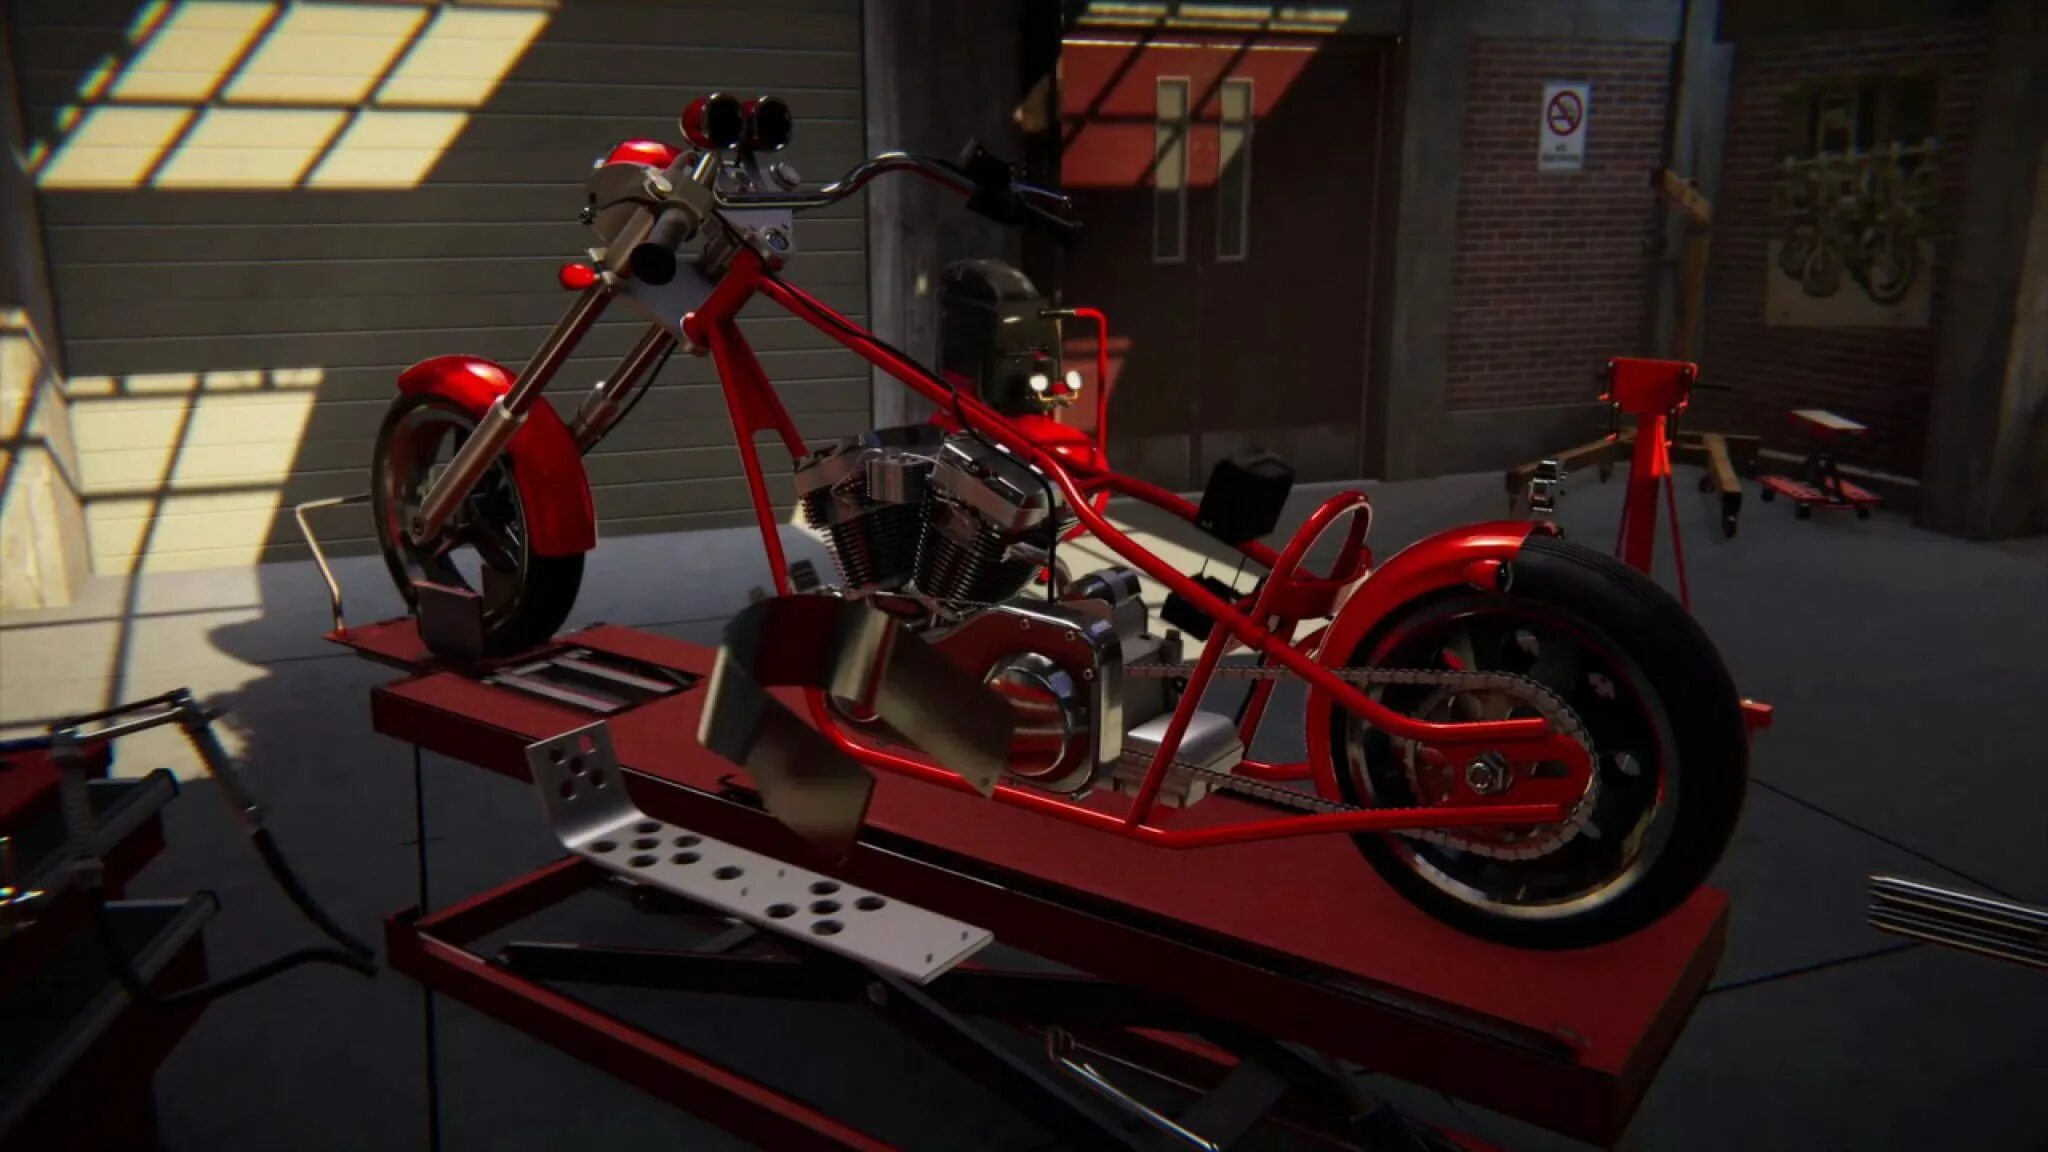 Bike mechanic. Motorcycle Mechanic Simulator 2021. Biker Garage: Mechanic Simulator. Motorcycle Mechanic Simulator 2021 мотоциклы. Мото механик симулятор 2019.